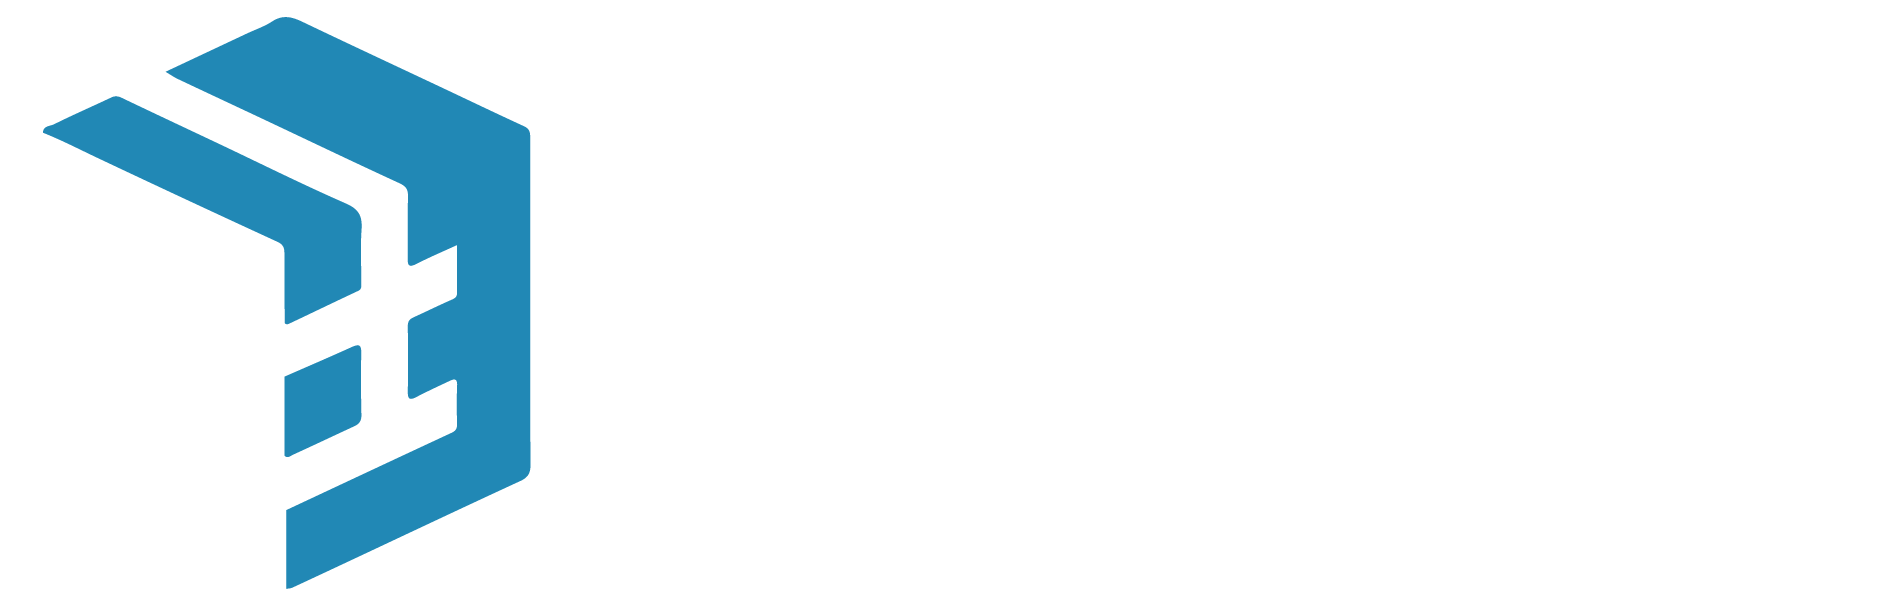 FINOCIO-FINANSOPORTES-CONSULTING-ISOLOGO